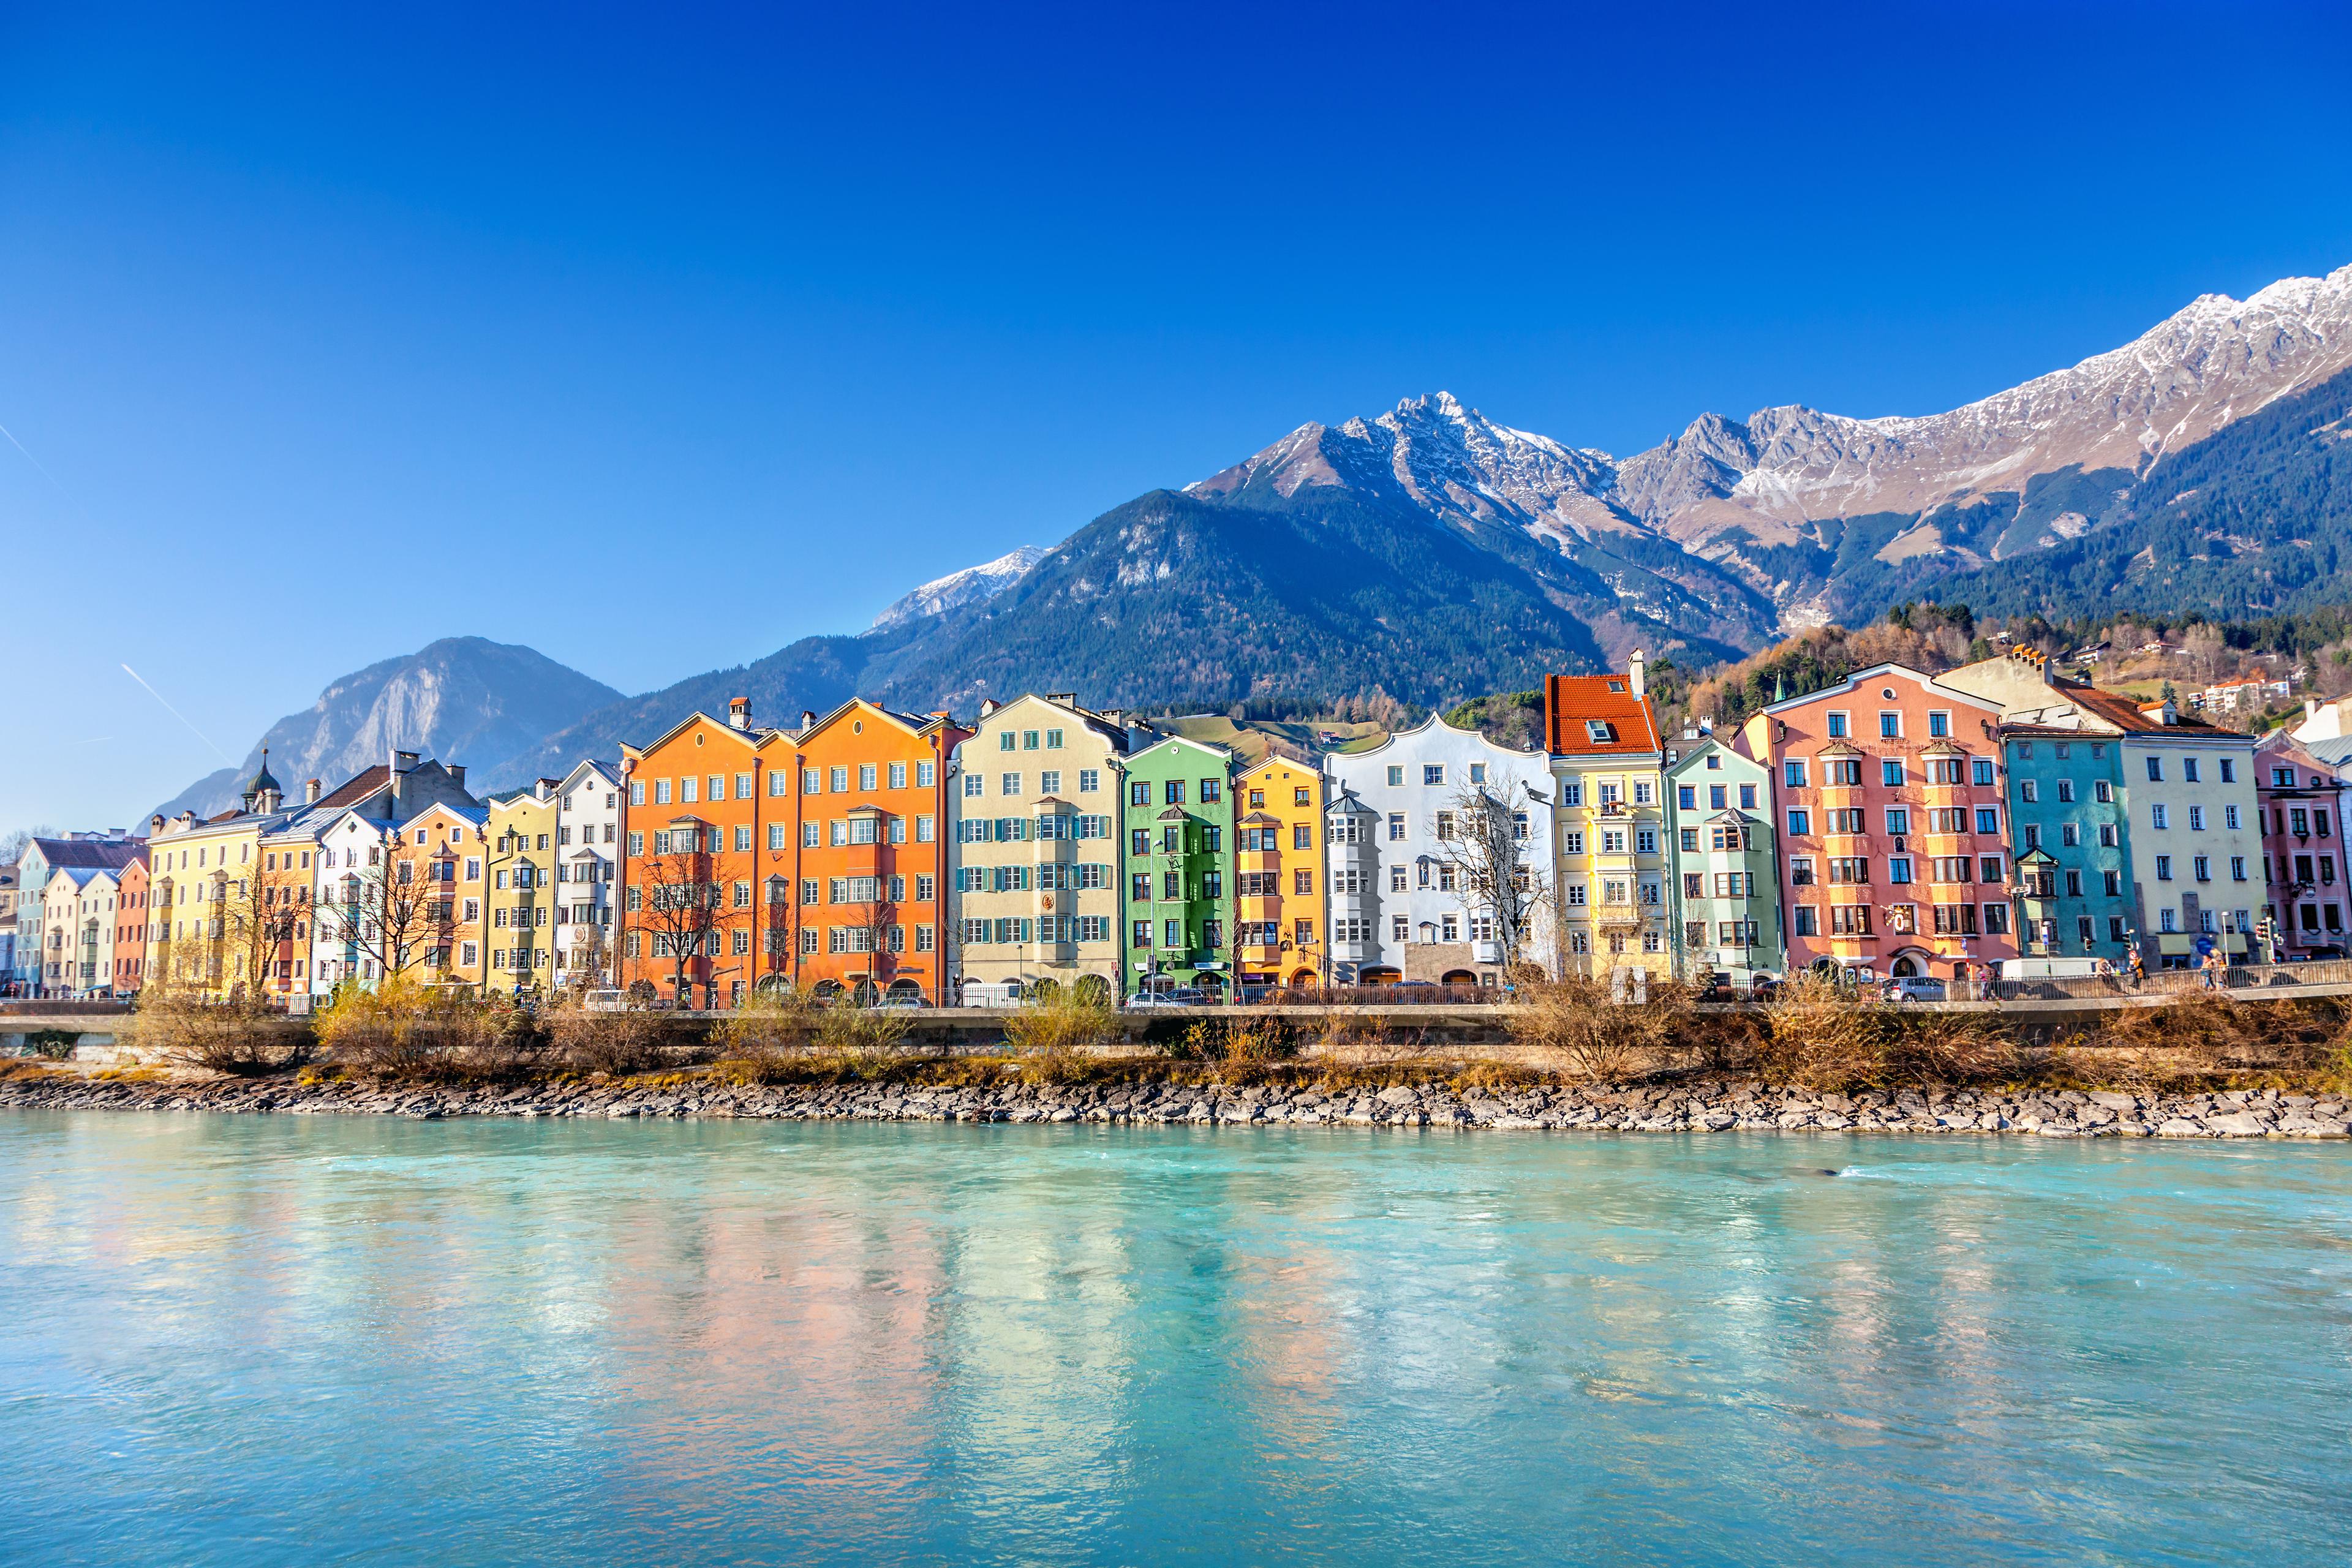 The Innsbruck city, cover photo